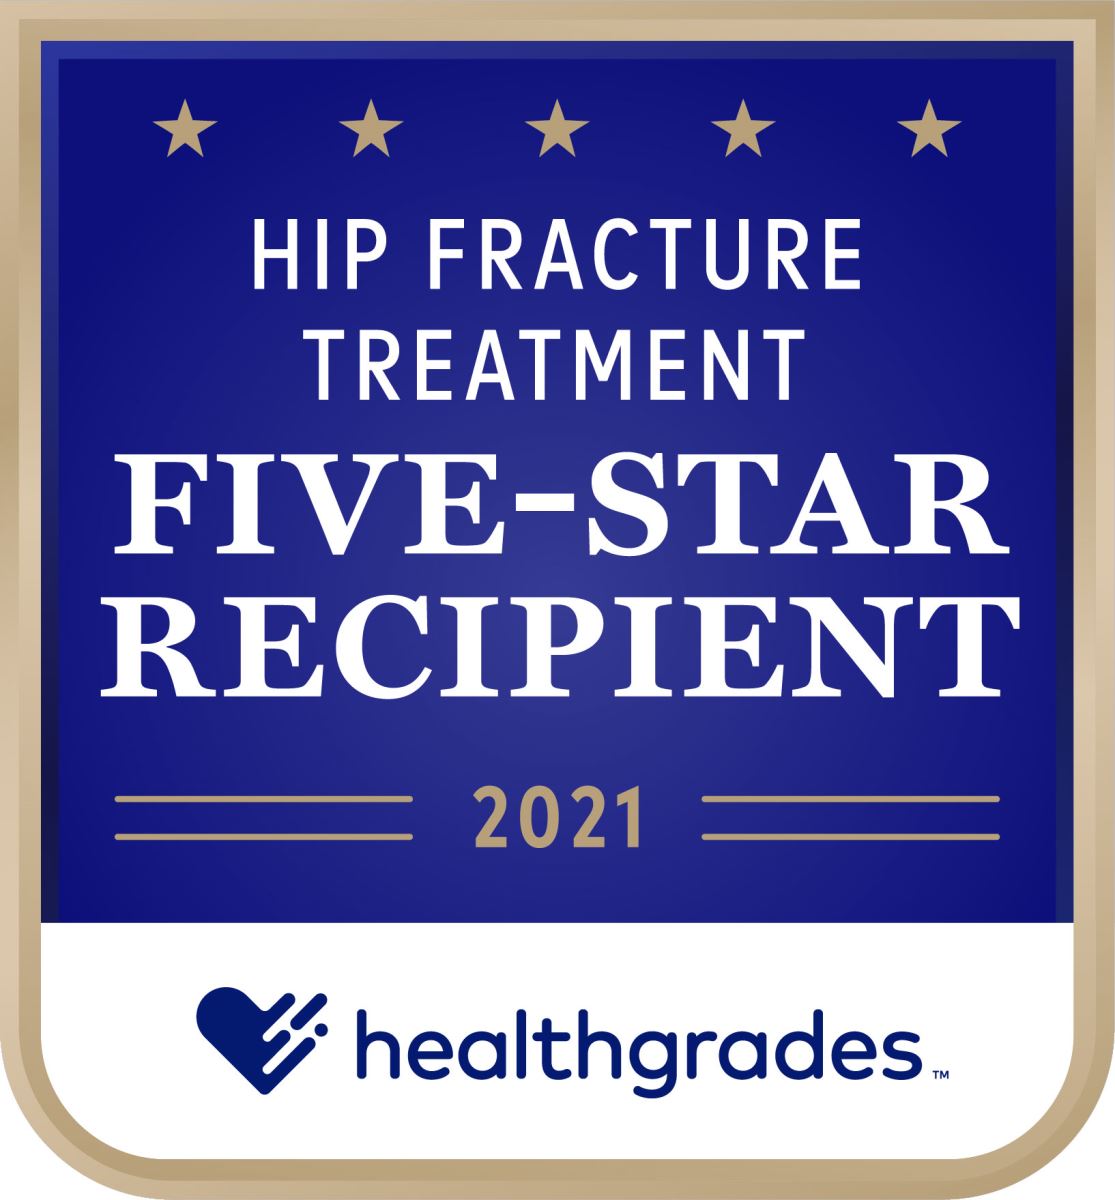 Hip Fracture Treatment Five-Star Recipient 2021